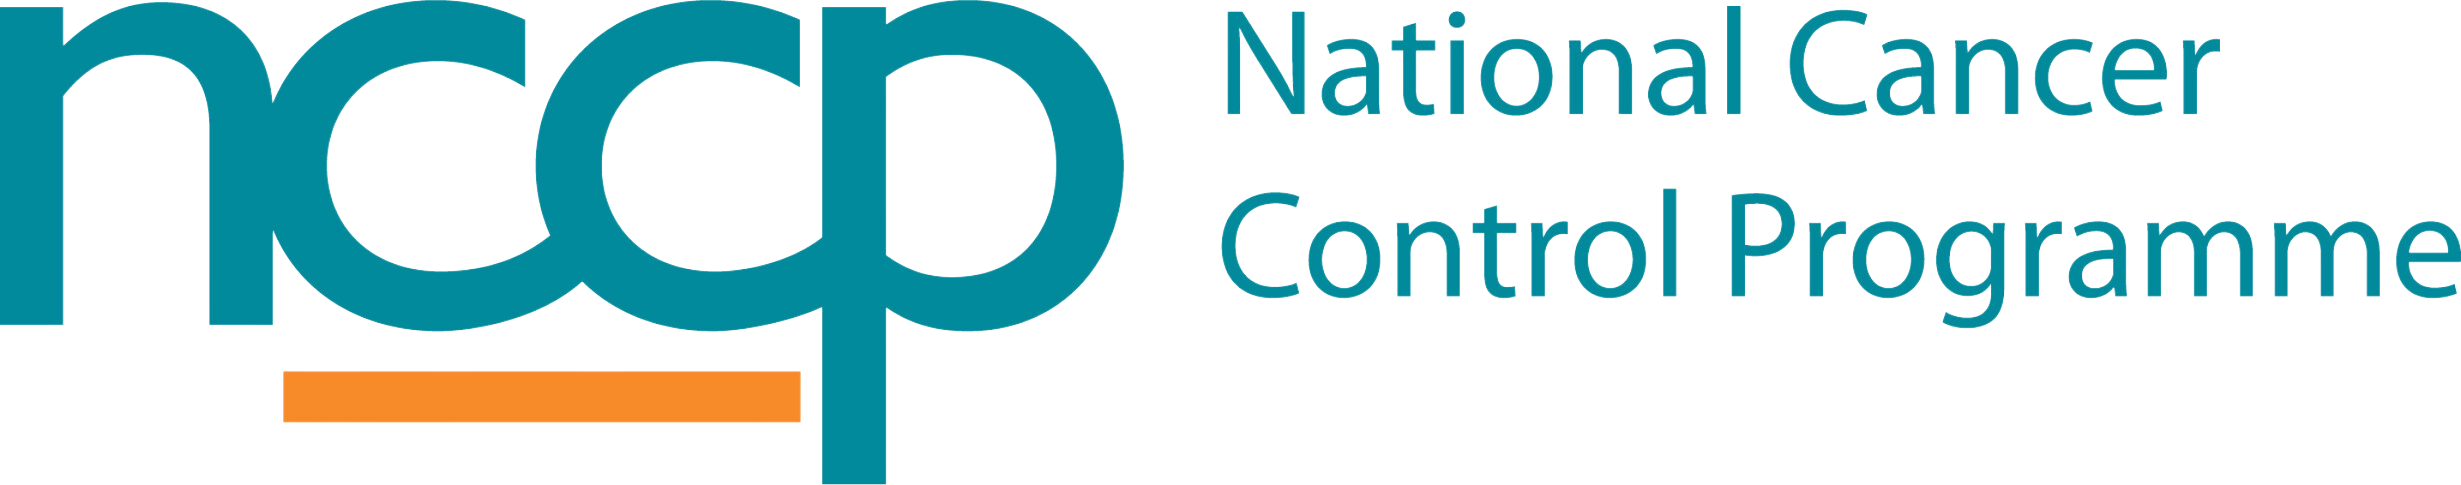 National Cancer Control Programme, Health Service Executive (NCCP, HSE)